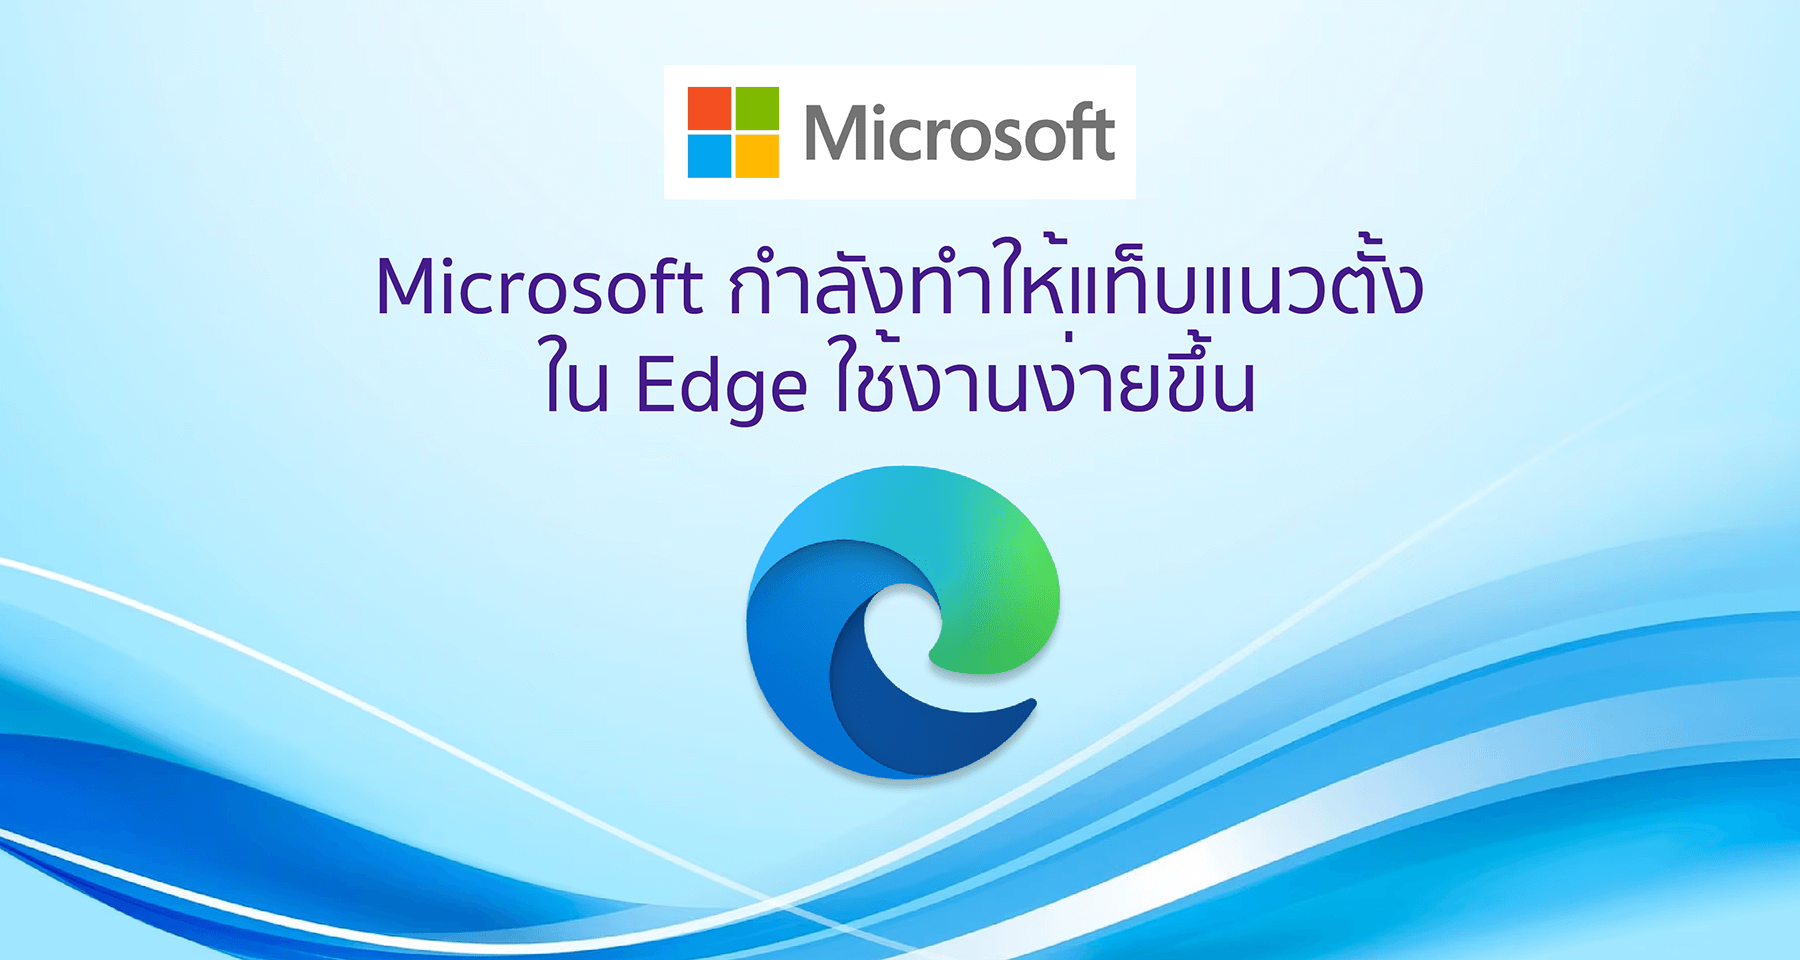 Microsoft กำลังทำให้แท็บแนวตั้งใน Edge ใช้งานง่ายขึ้น